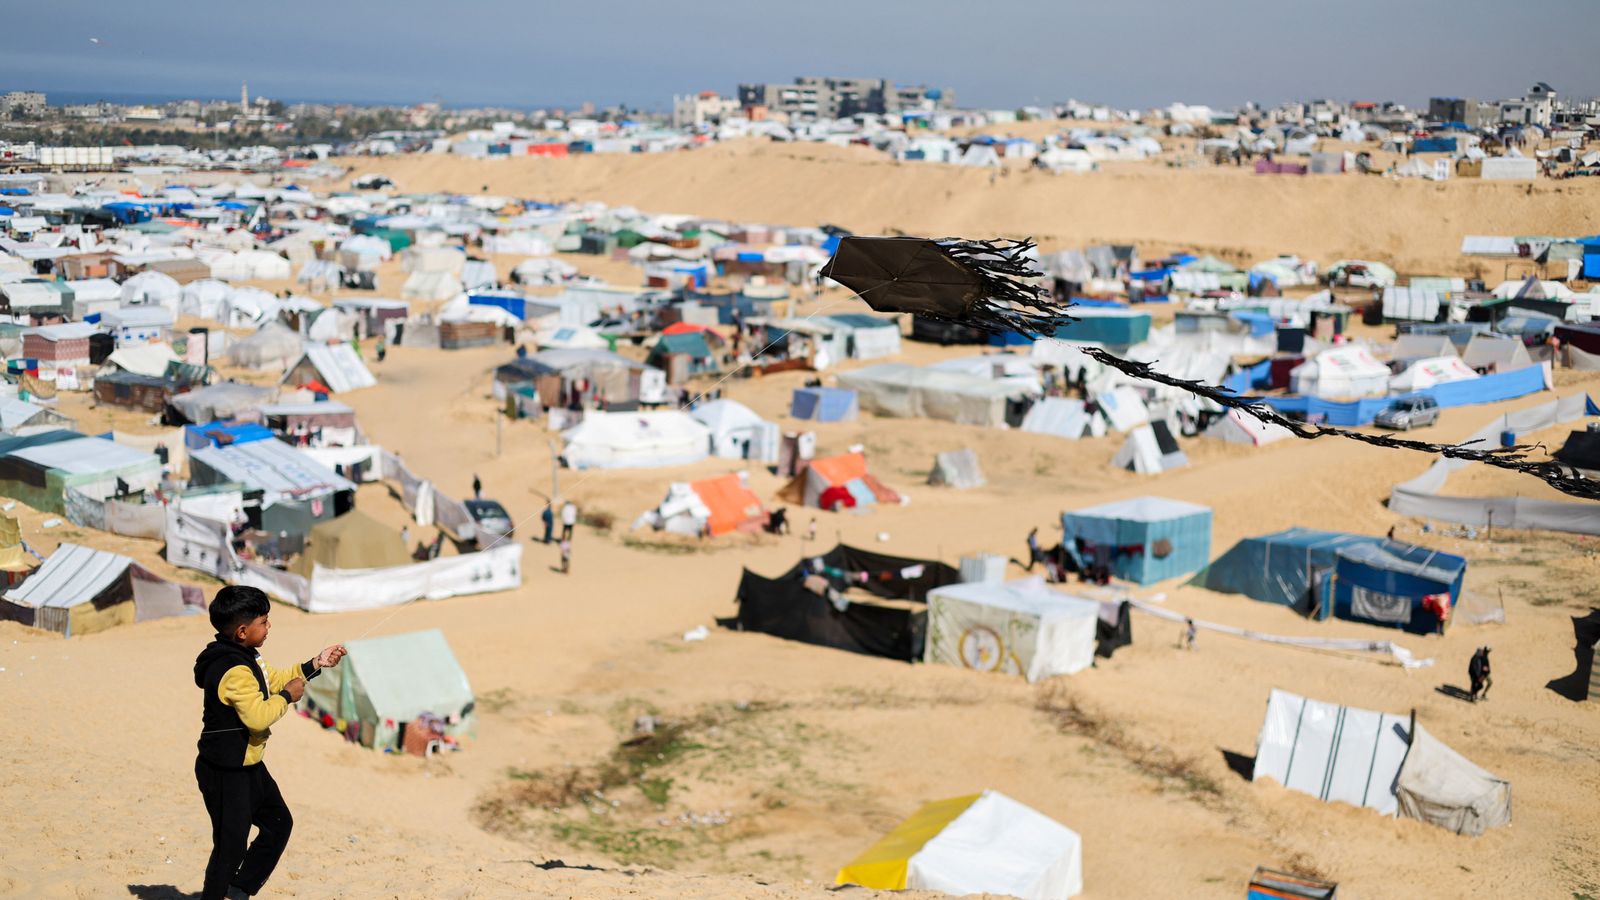 netanyahu orders evacuation of rafah as aid agencies warn escalation will be 'devastating'